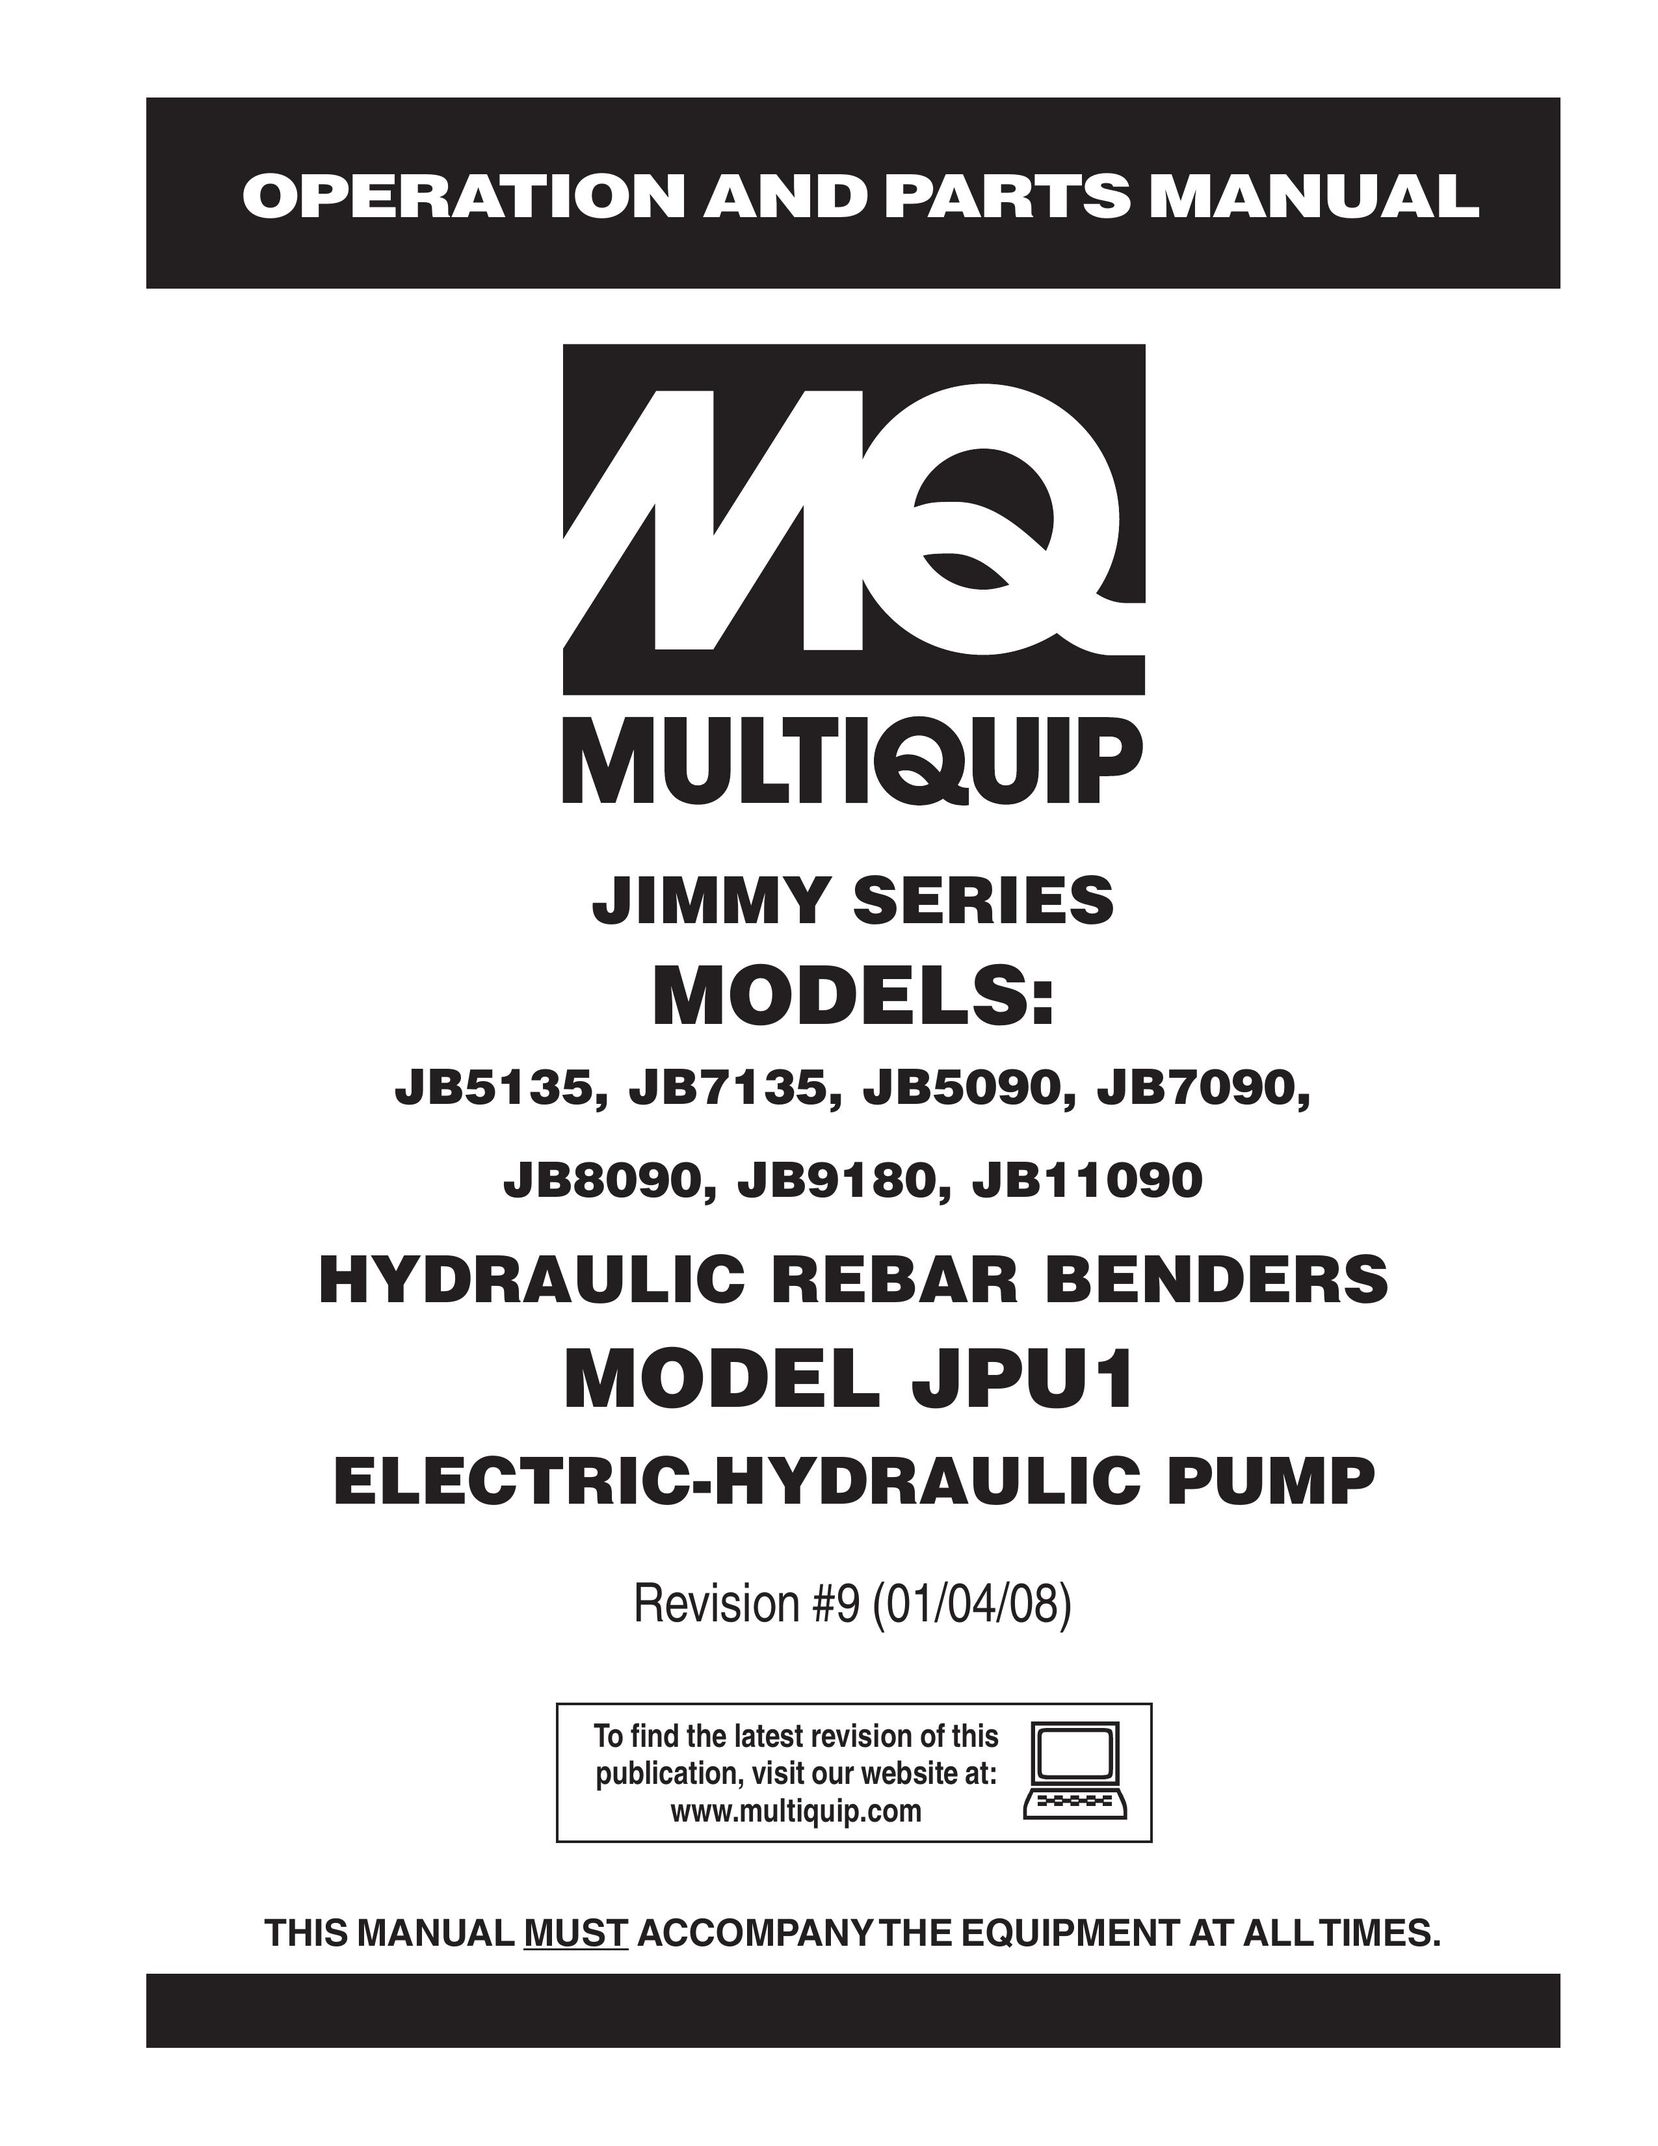 Multiquip JB7090 Heat Pump User Manual